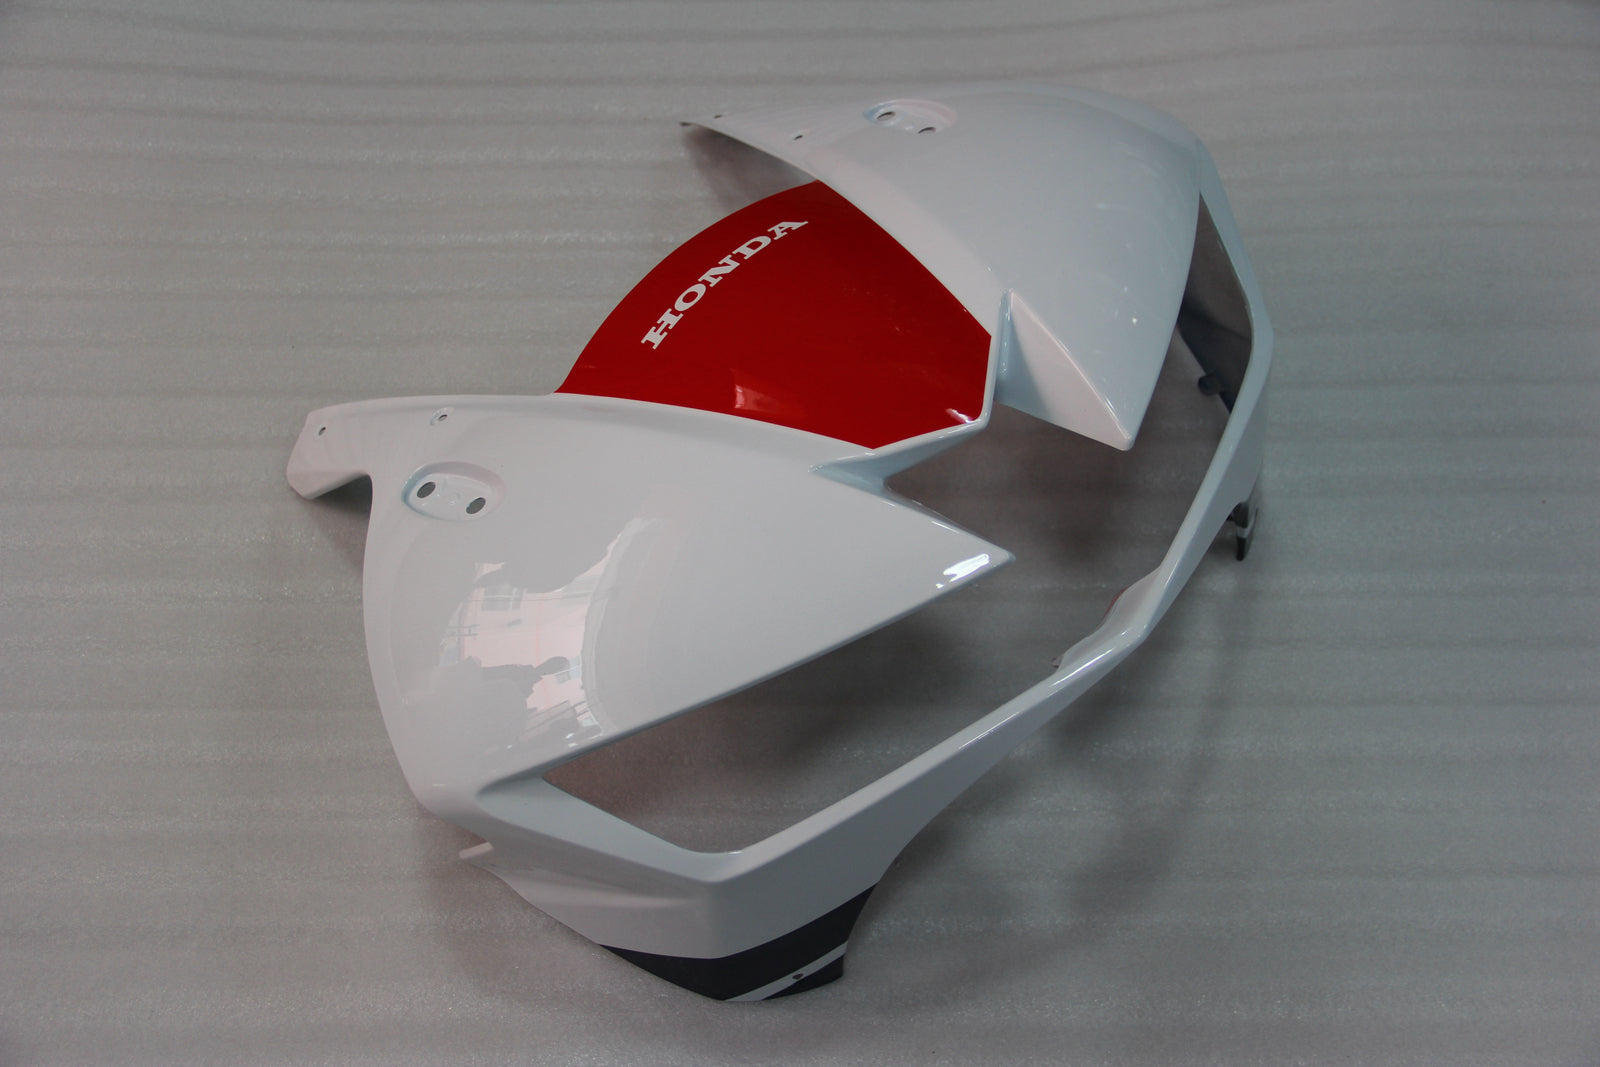 Kit carena Amotopart 2013-2023 Honda CBR600RR bianco e rosso